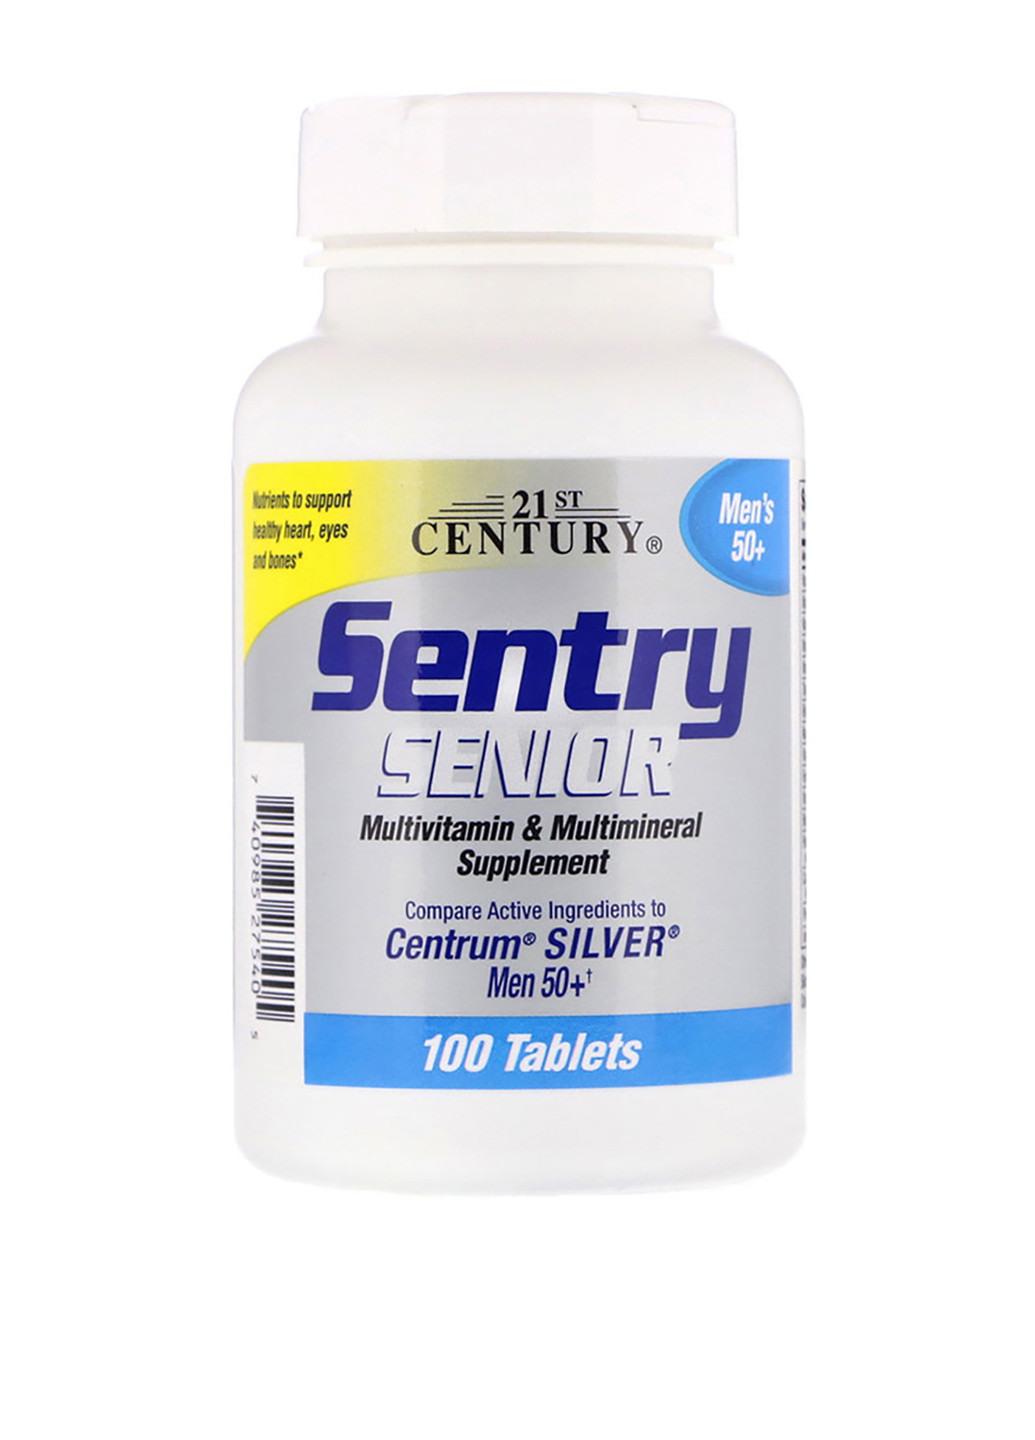 Мультивитамины и мультиминералы для мужчин 50+, Sentry (100 таб.) 21st Century (251206325)